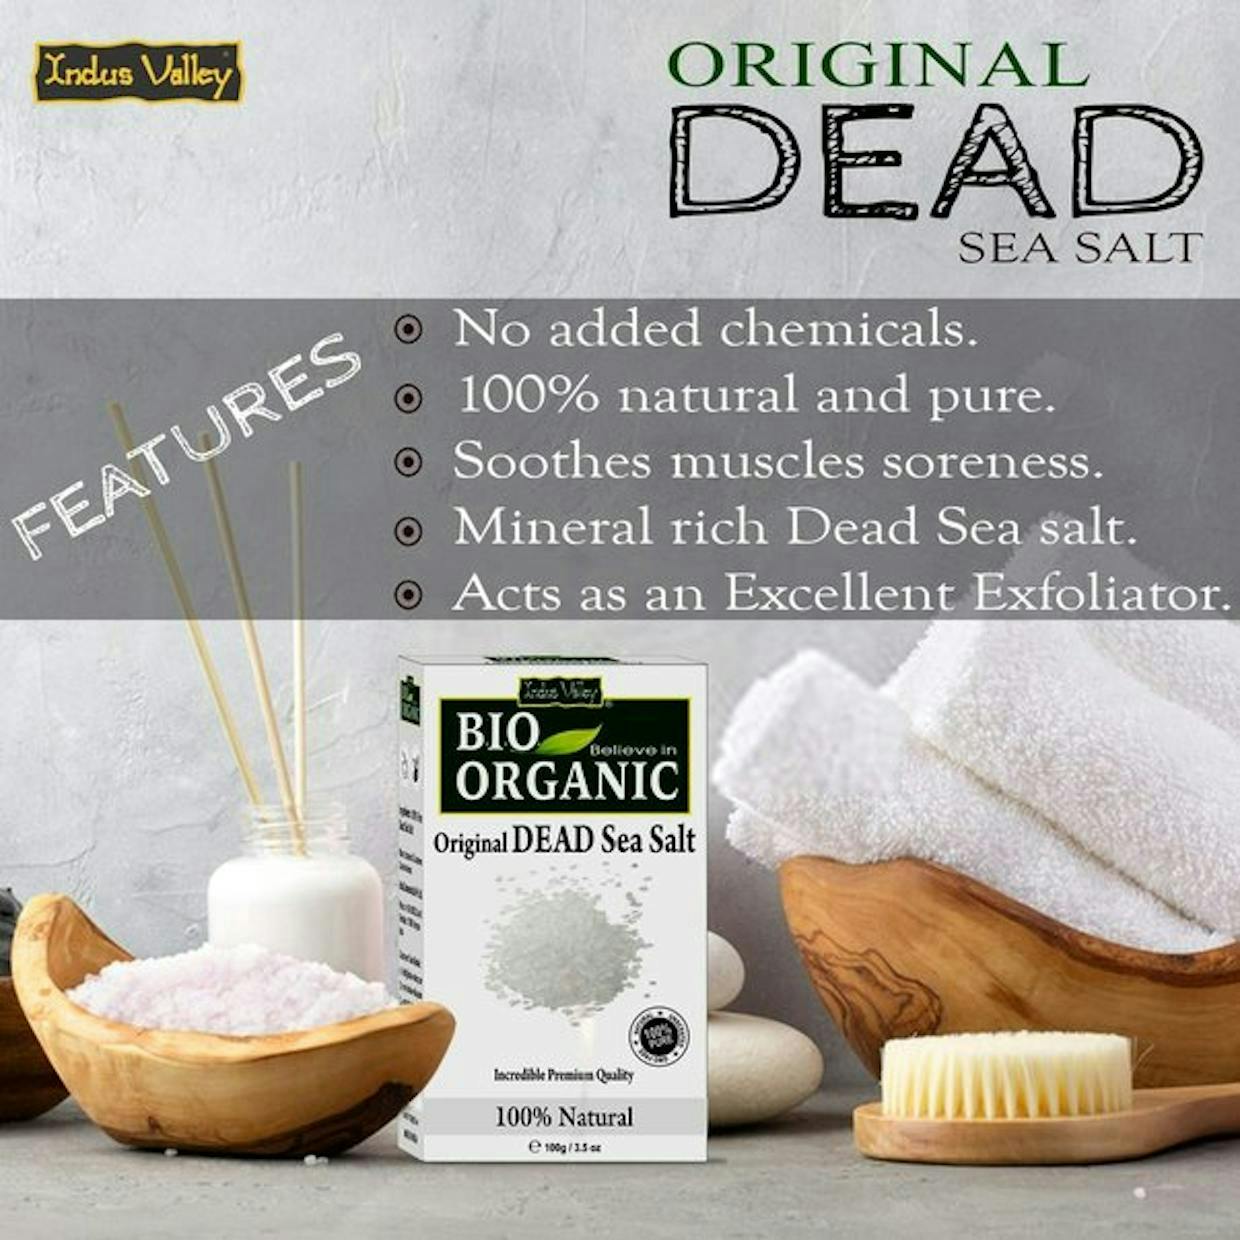 How does the Dead Sea salt help your skin?